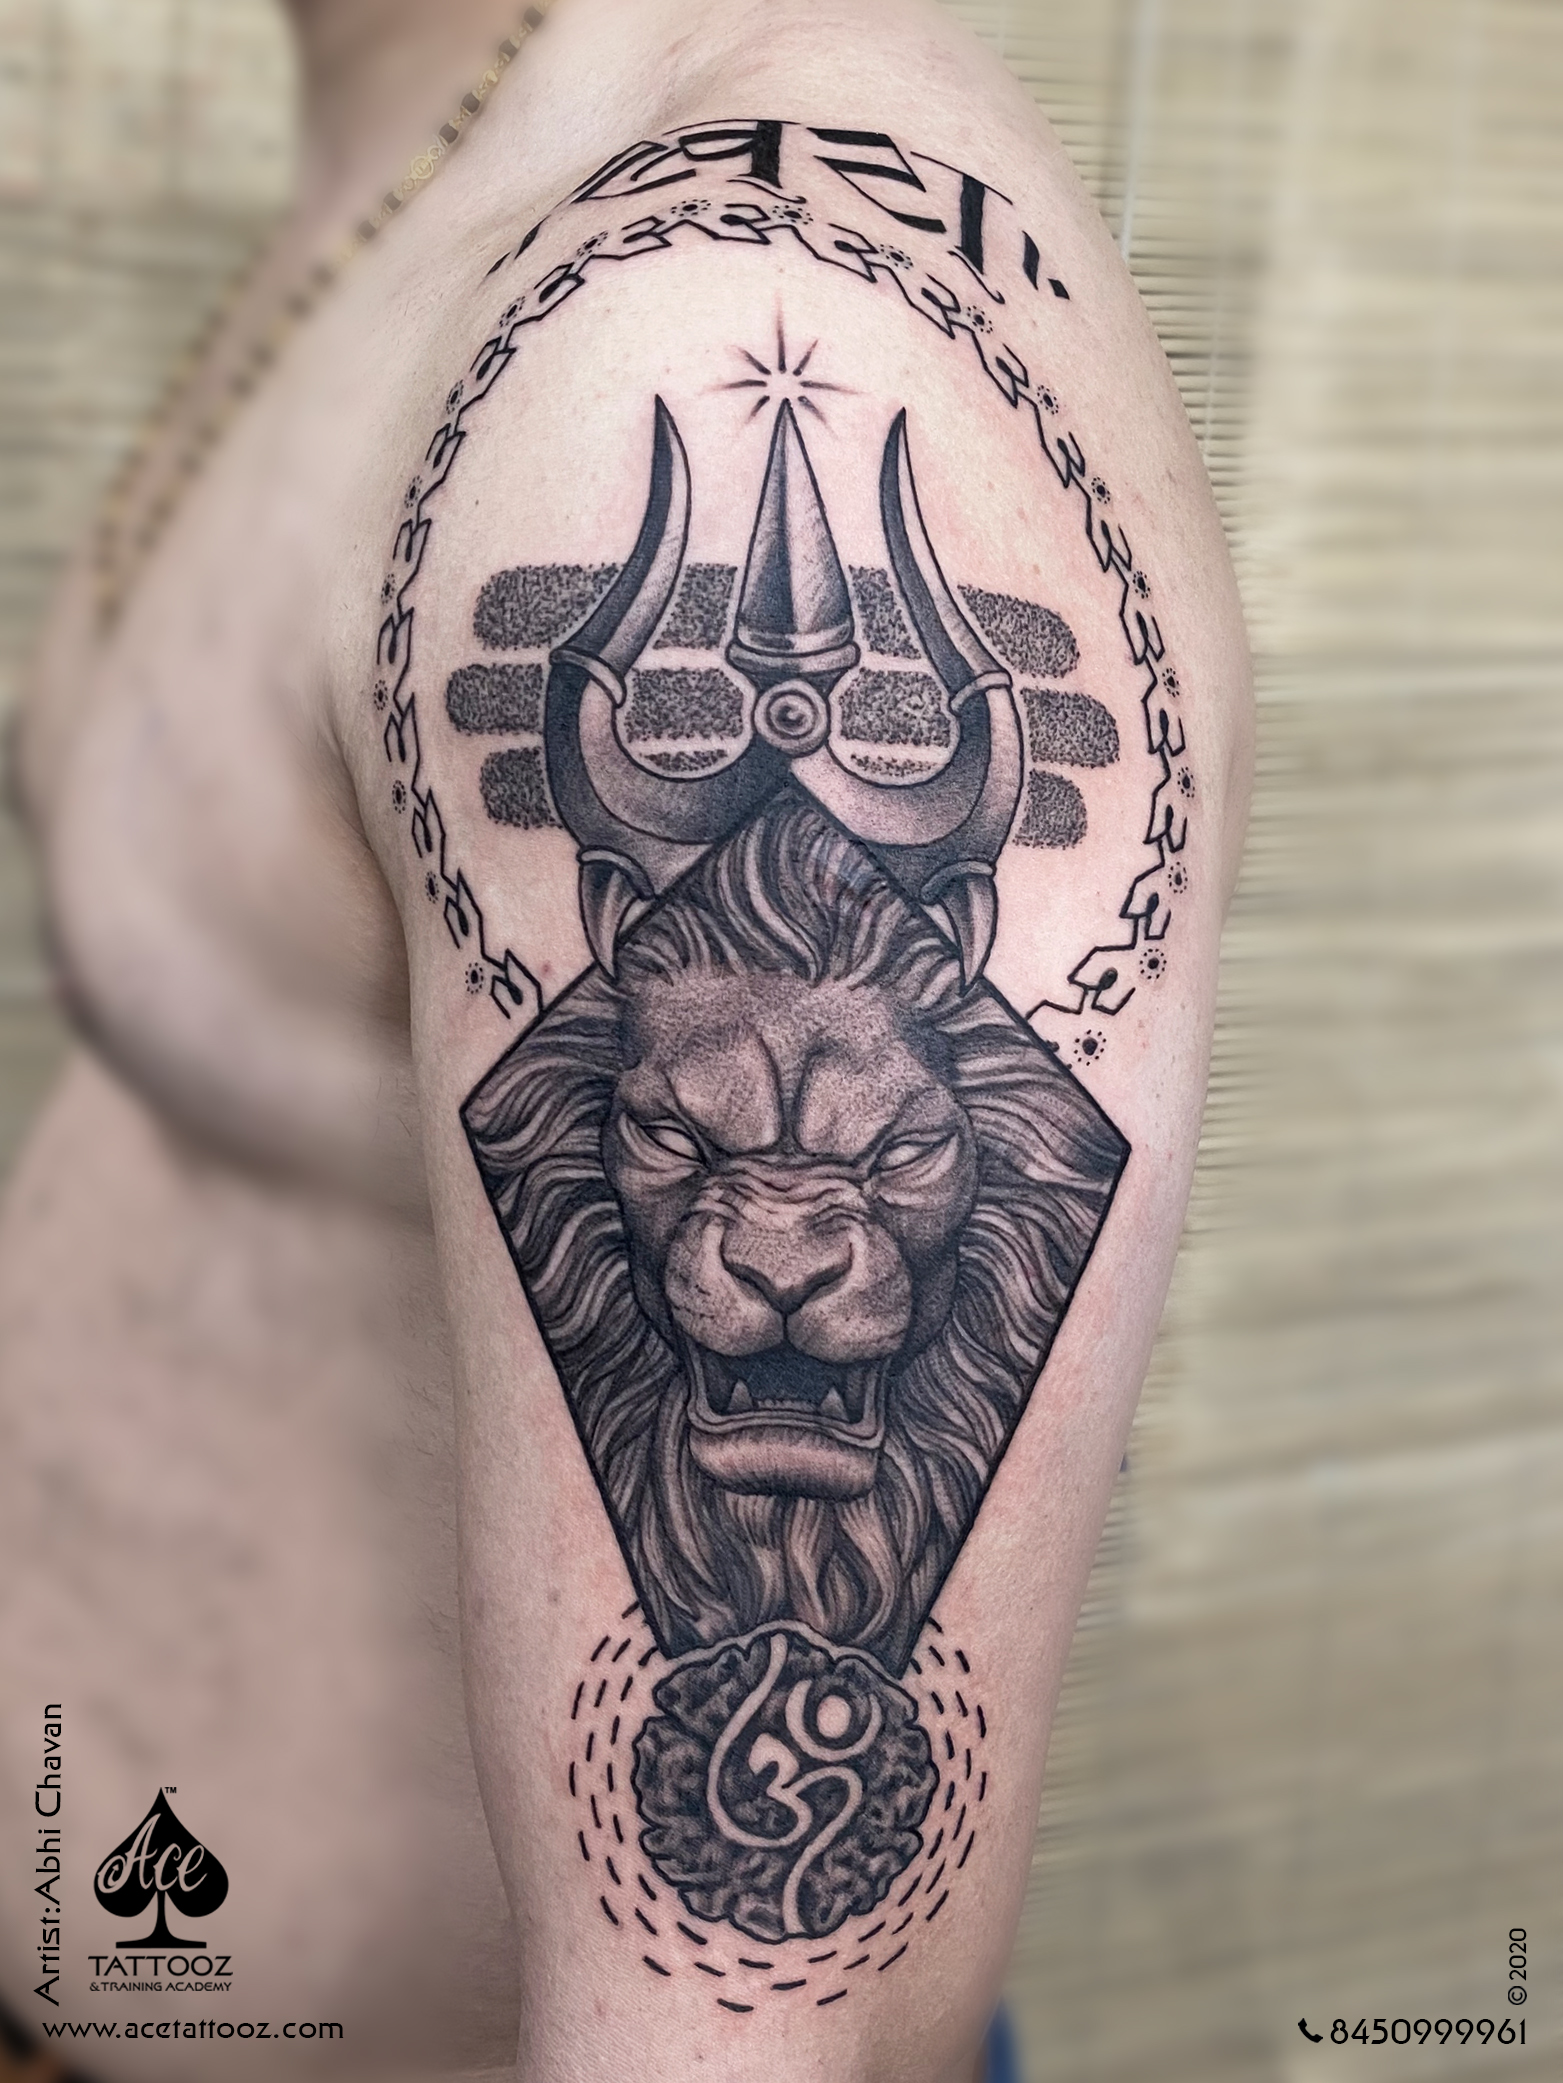 Reasons to Finally Get Amazing Lord Shiva Tattoo Designs